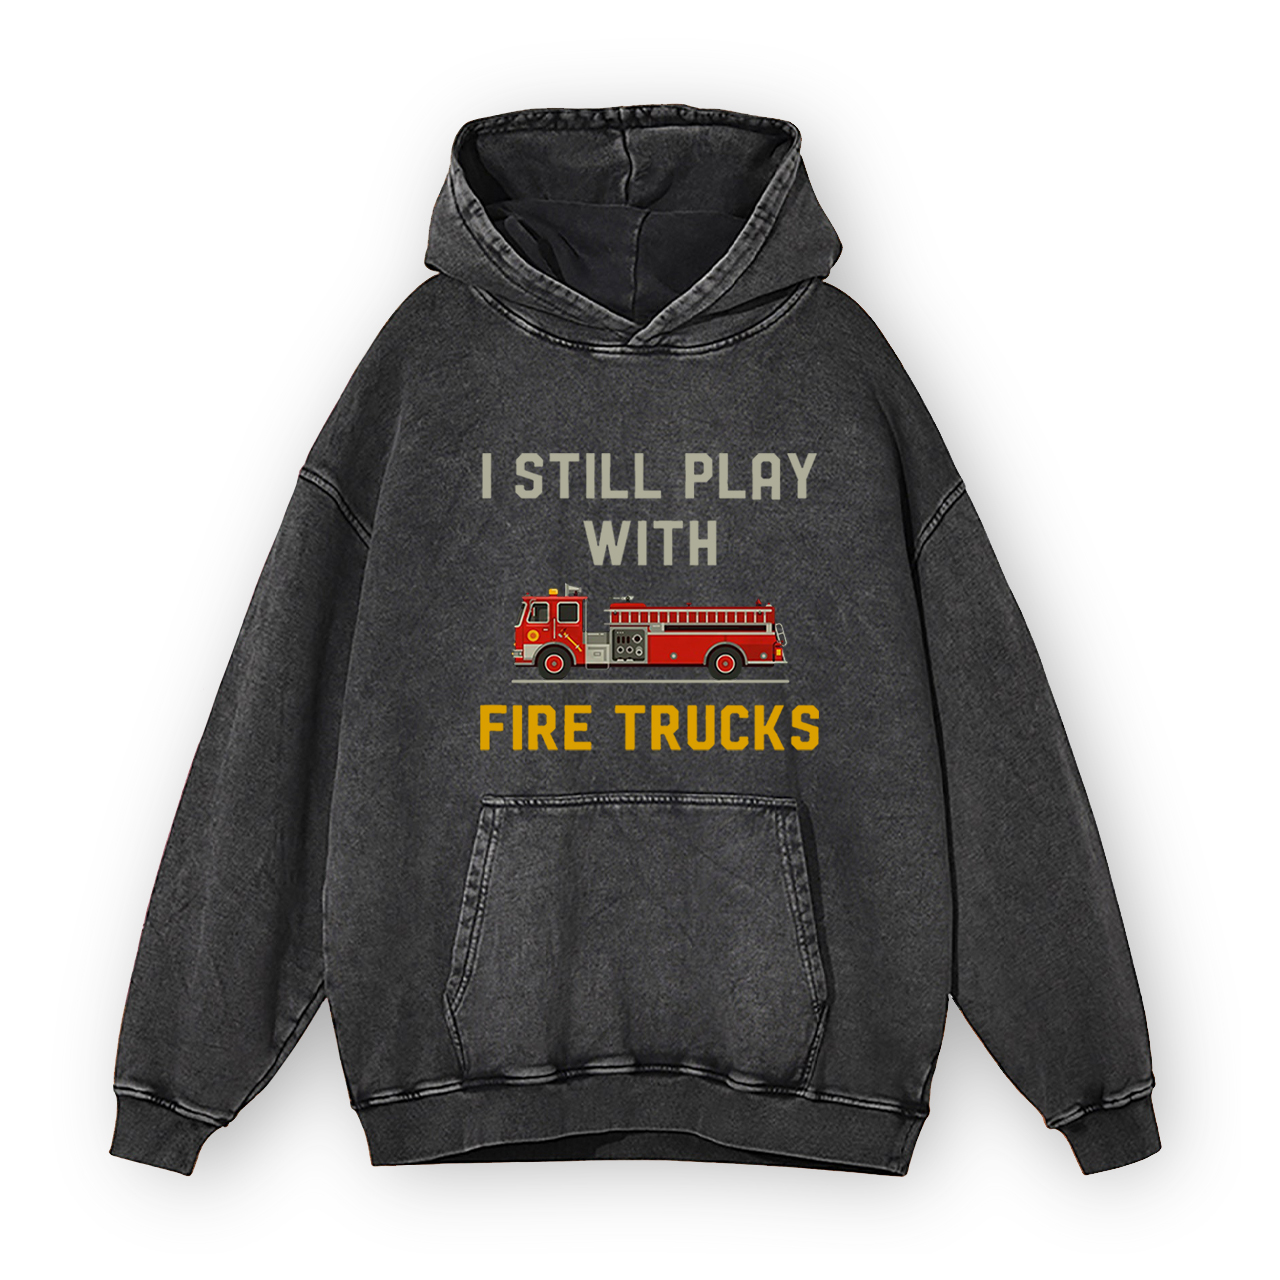 I Still Play With Fire Trucks Garment-Dye Hoodies